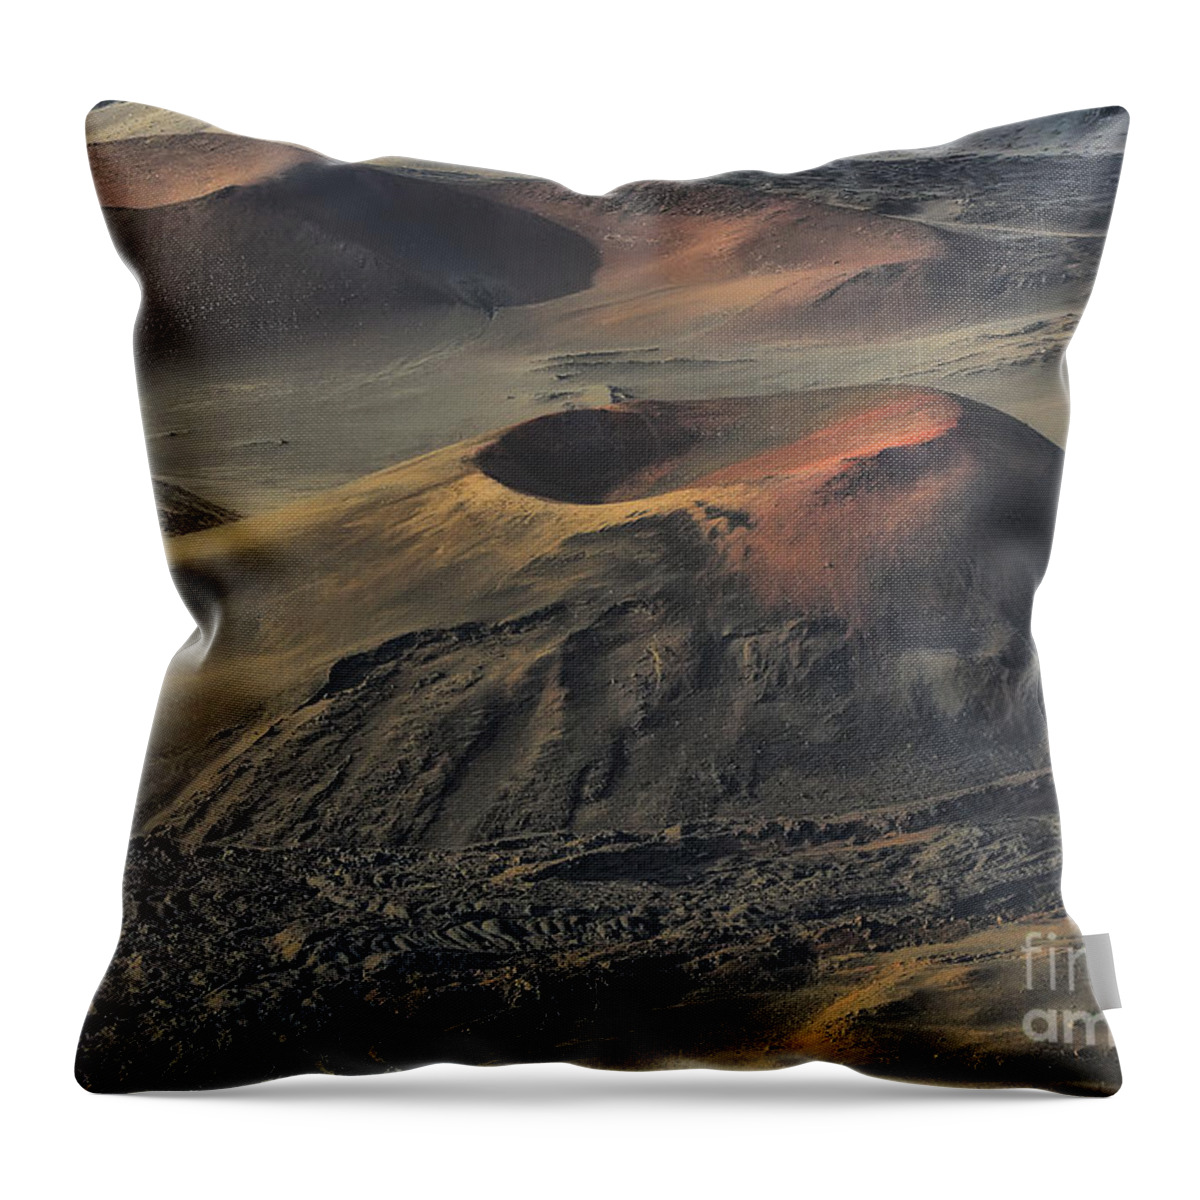 Volcano Throw Pillow featuring the photograph Haleakala Caldera Maui Hawaii by Teresa Zieba